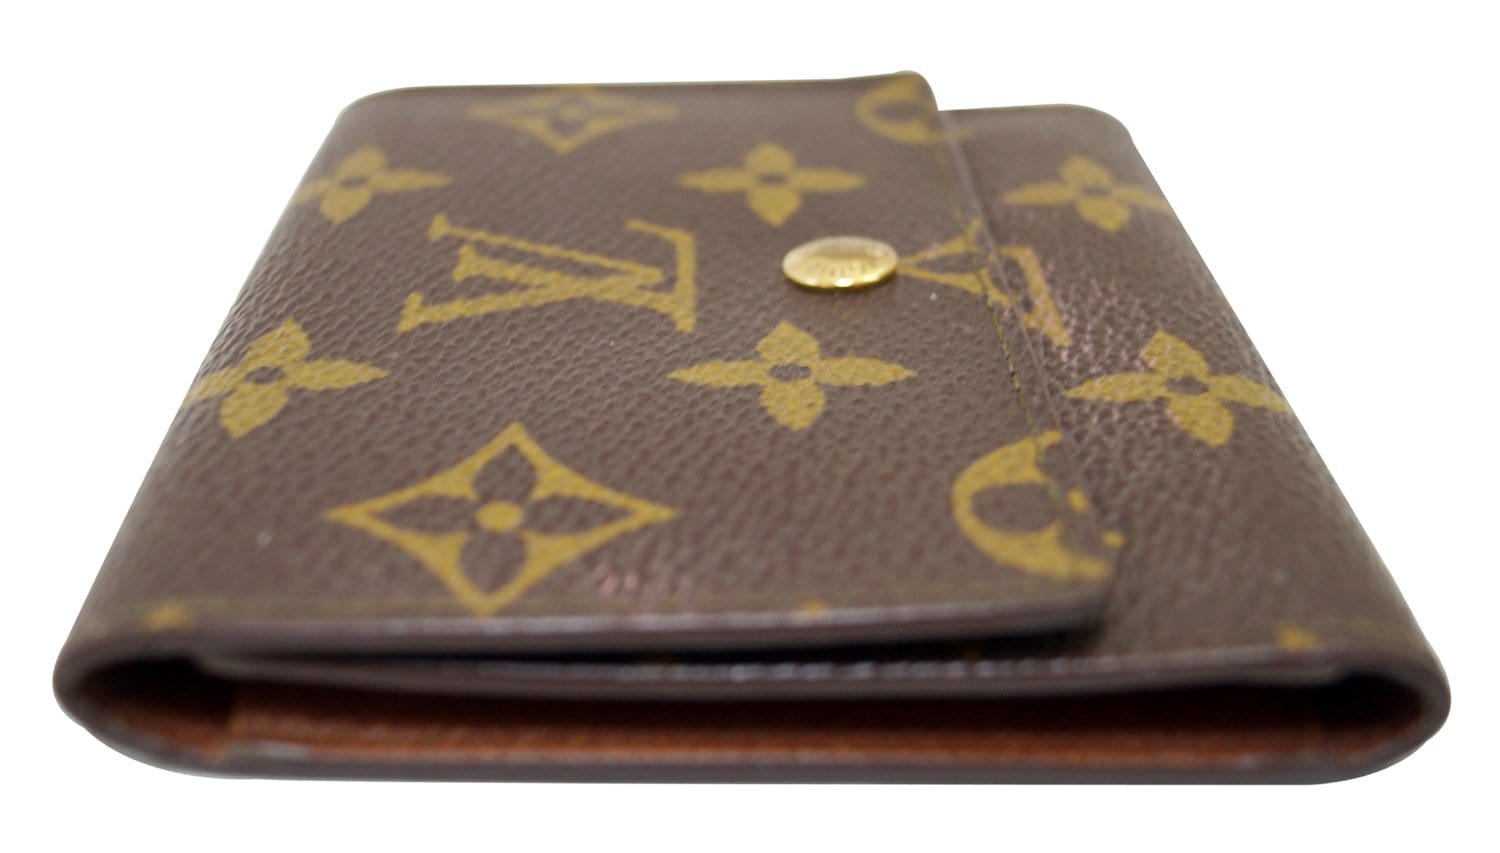 Louis Vuitton Brown, Pattern Print LV Monogram Leather Trifold Wallet